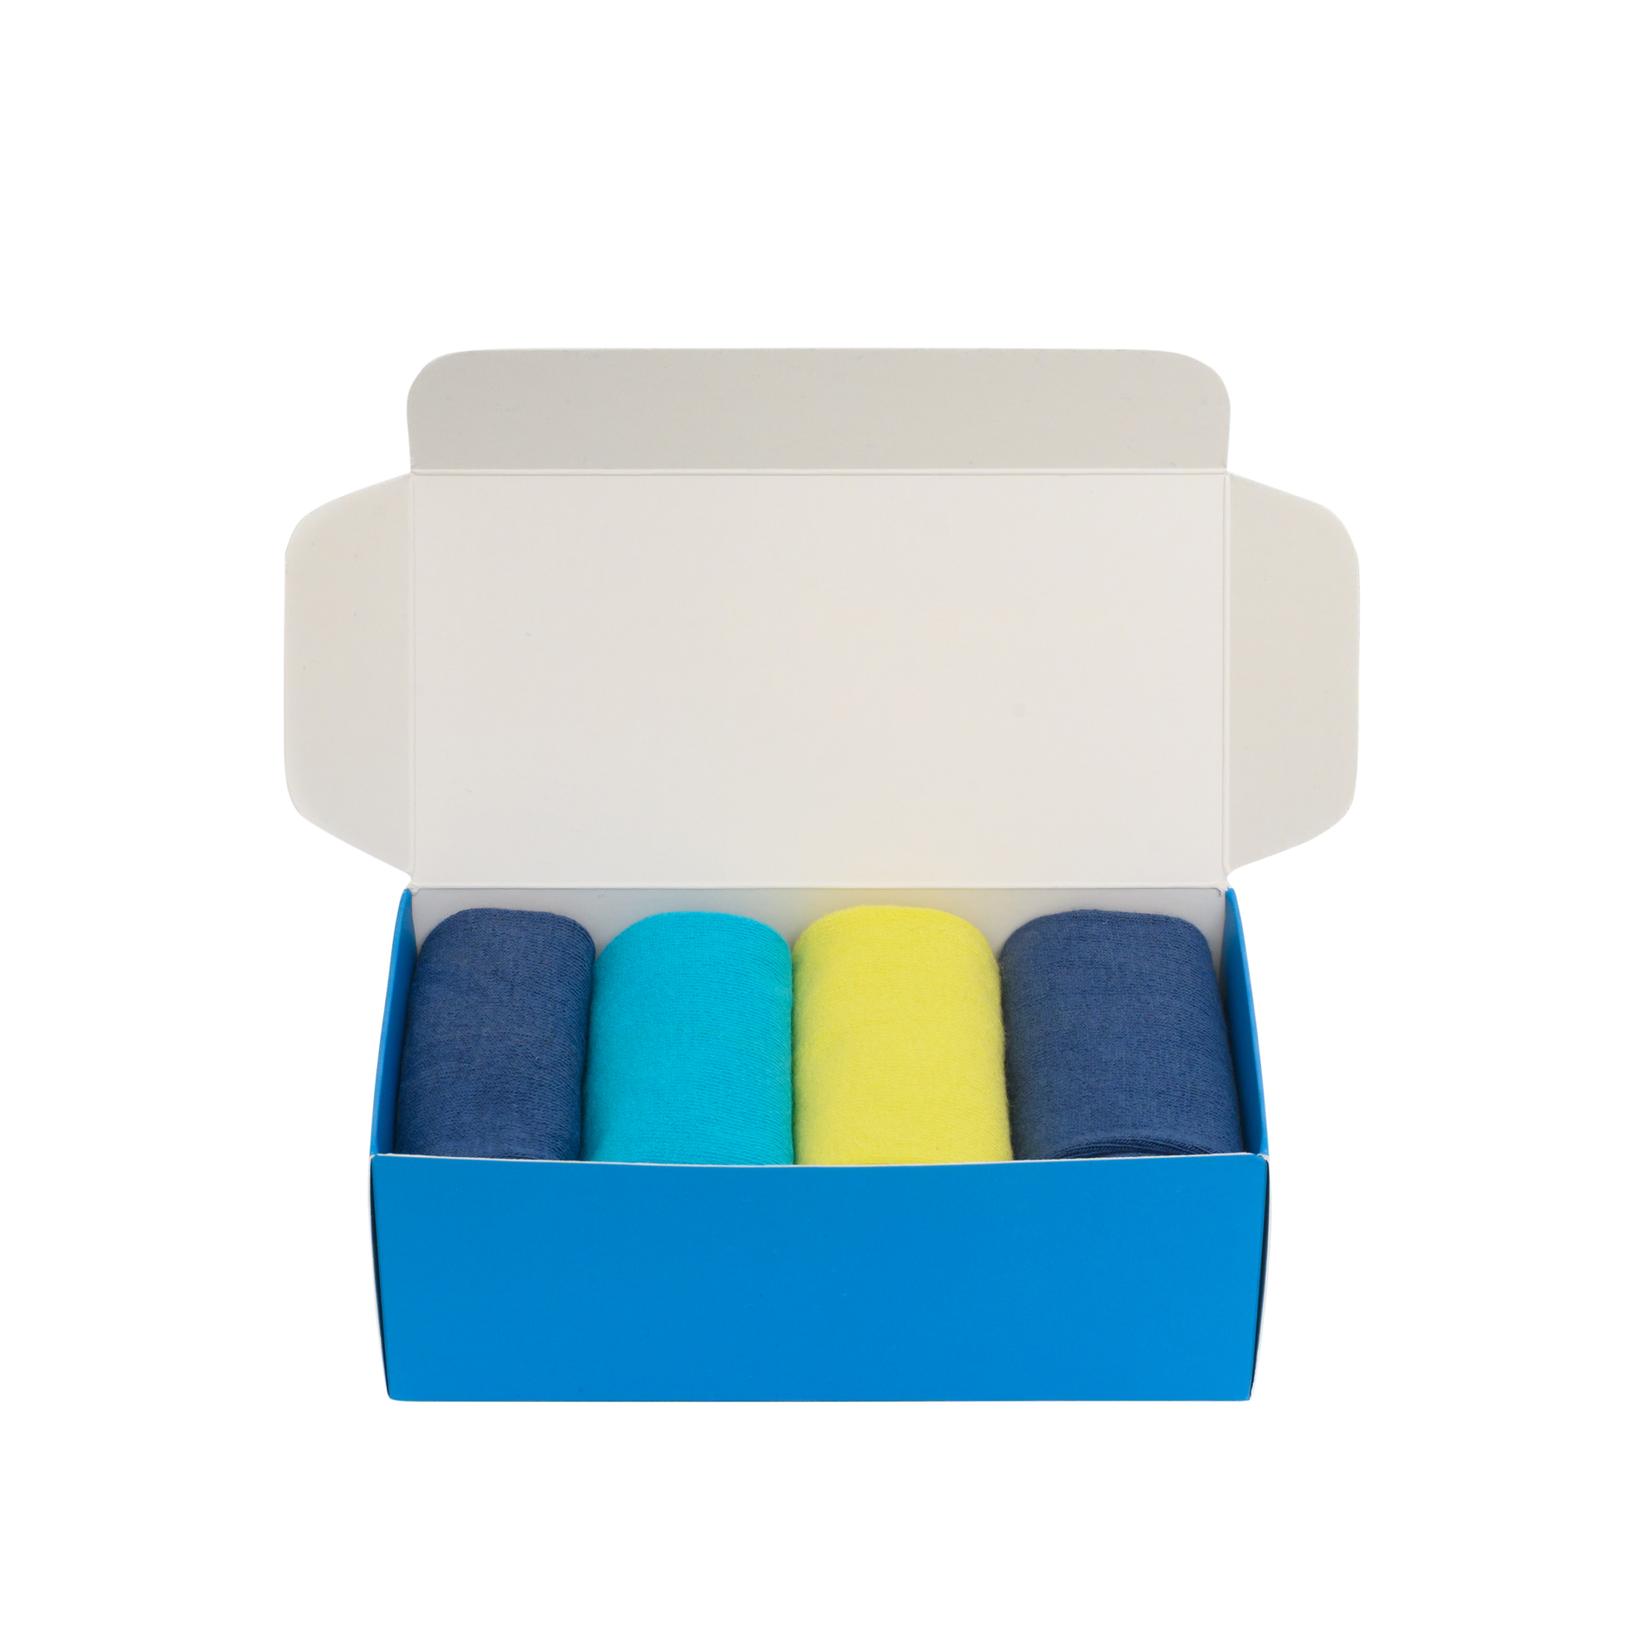 Slike BOX SOCKS Čarape za dečake 4/1 plave i žute